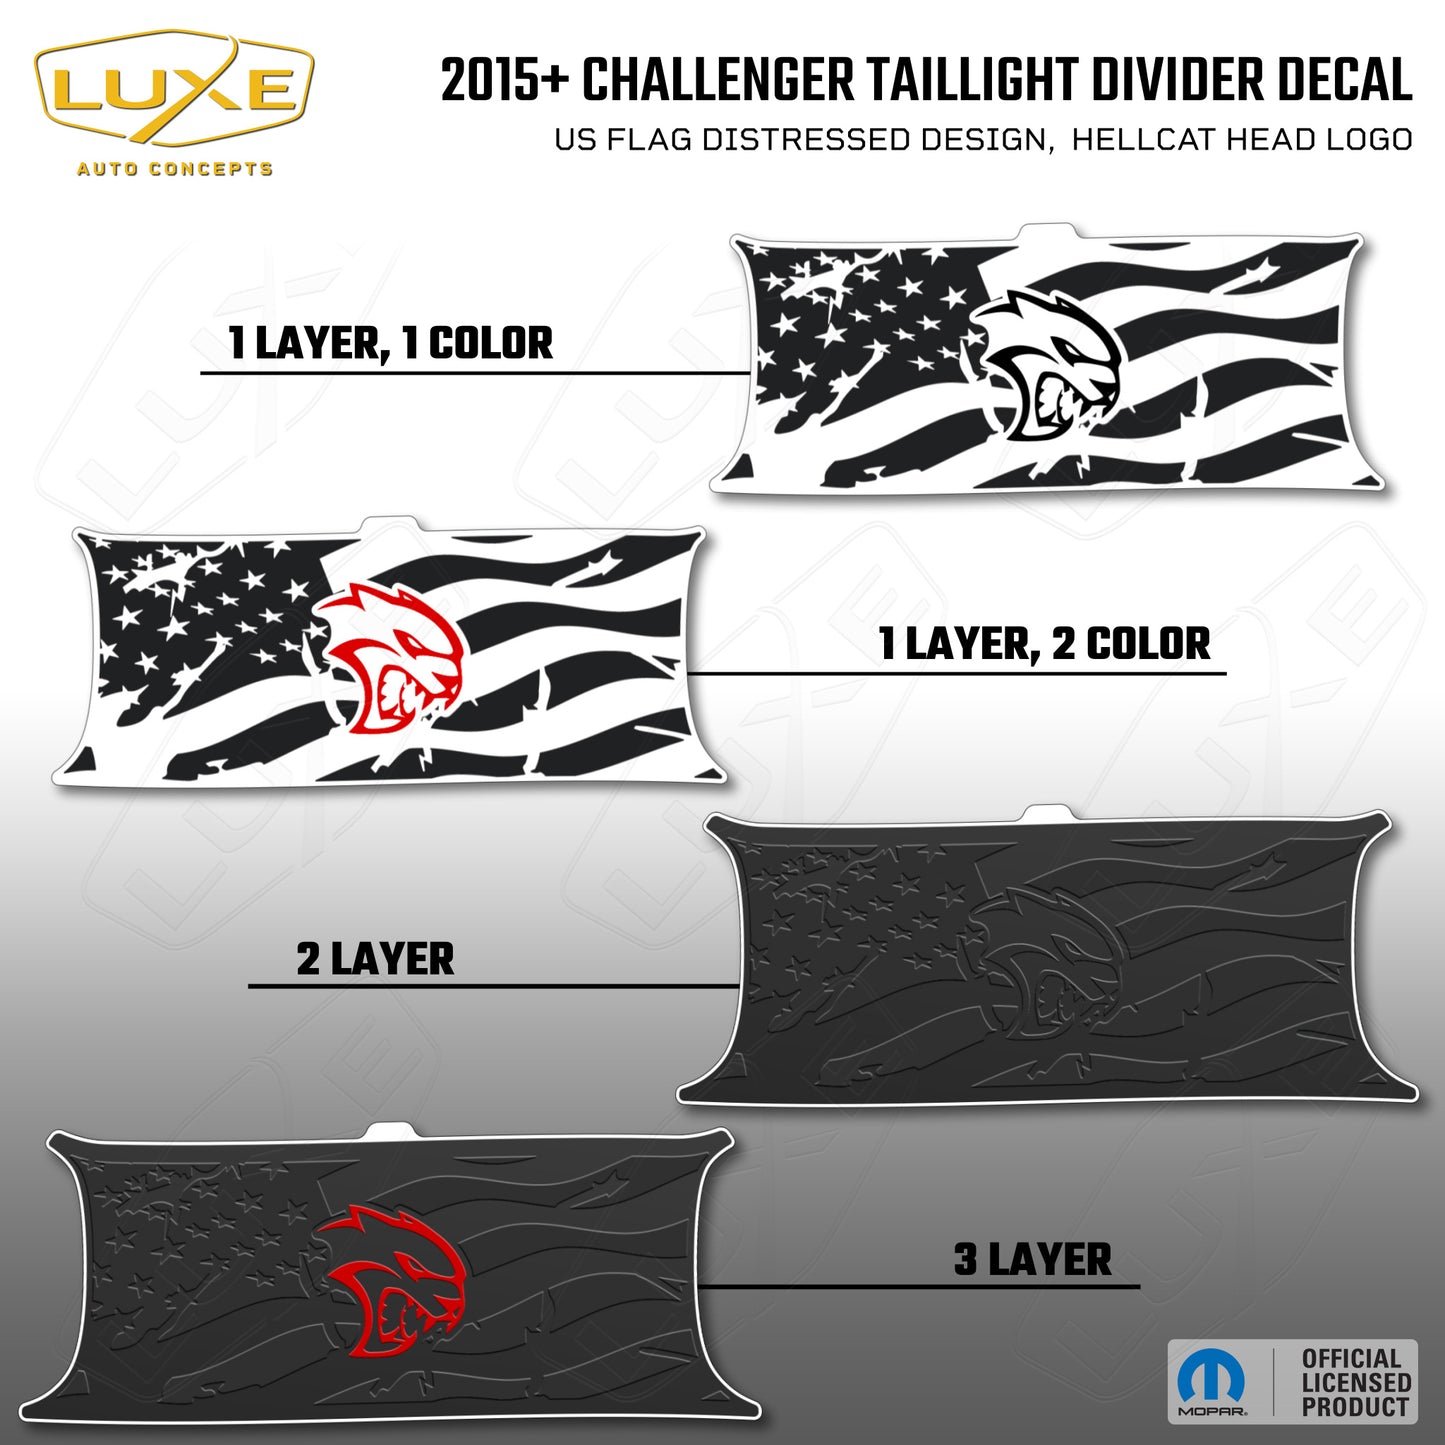 2015+ Challenger Taillight Center Divider Decal - US Flag Distressed Design, Hellcat Head Logo